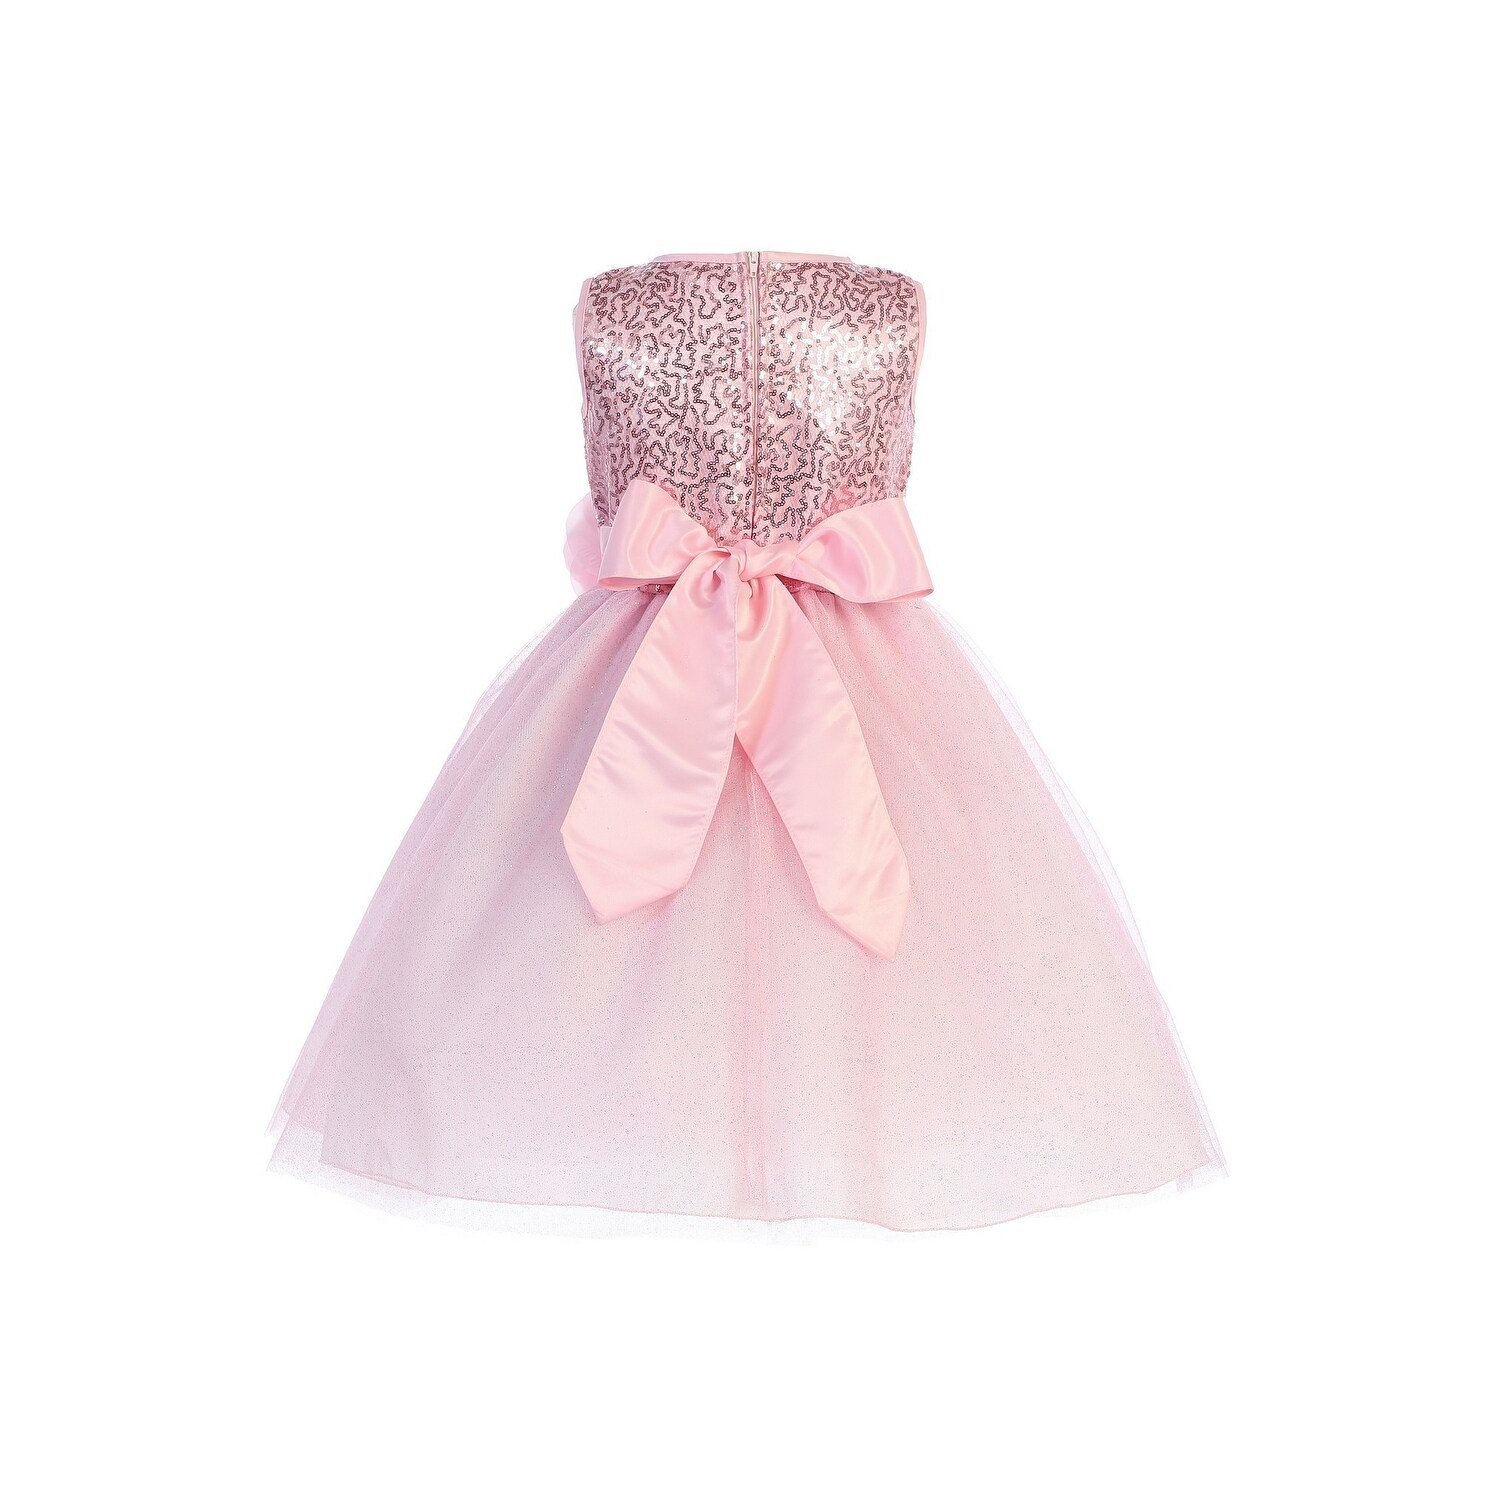 pink junior bridesmaid dresses